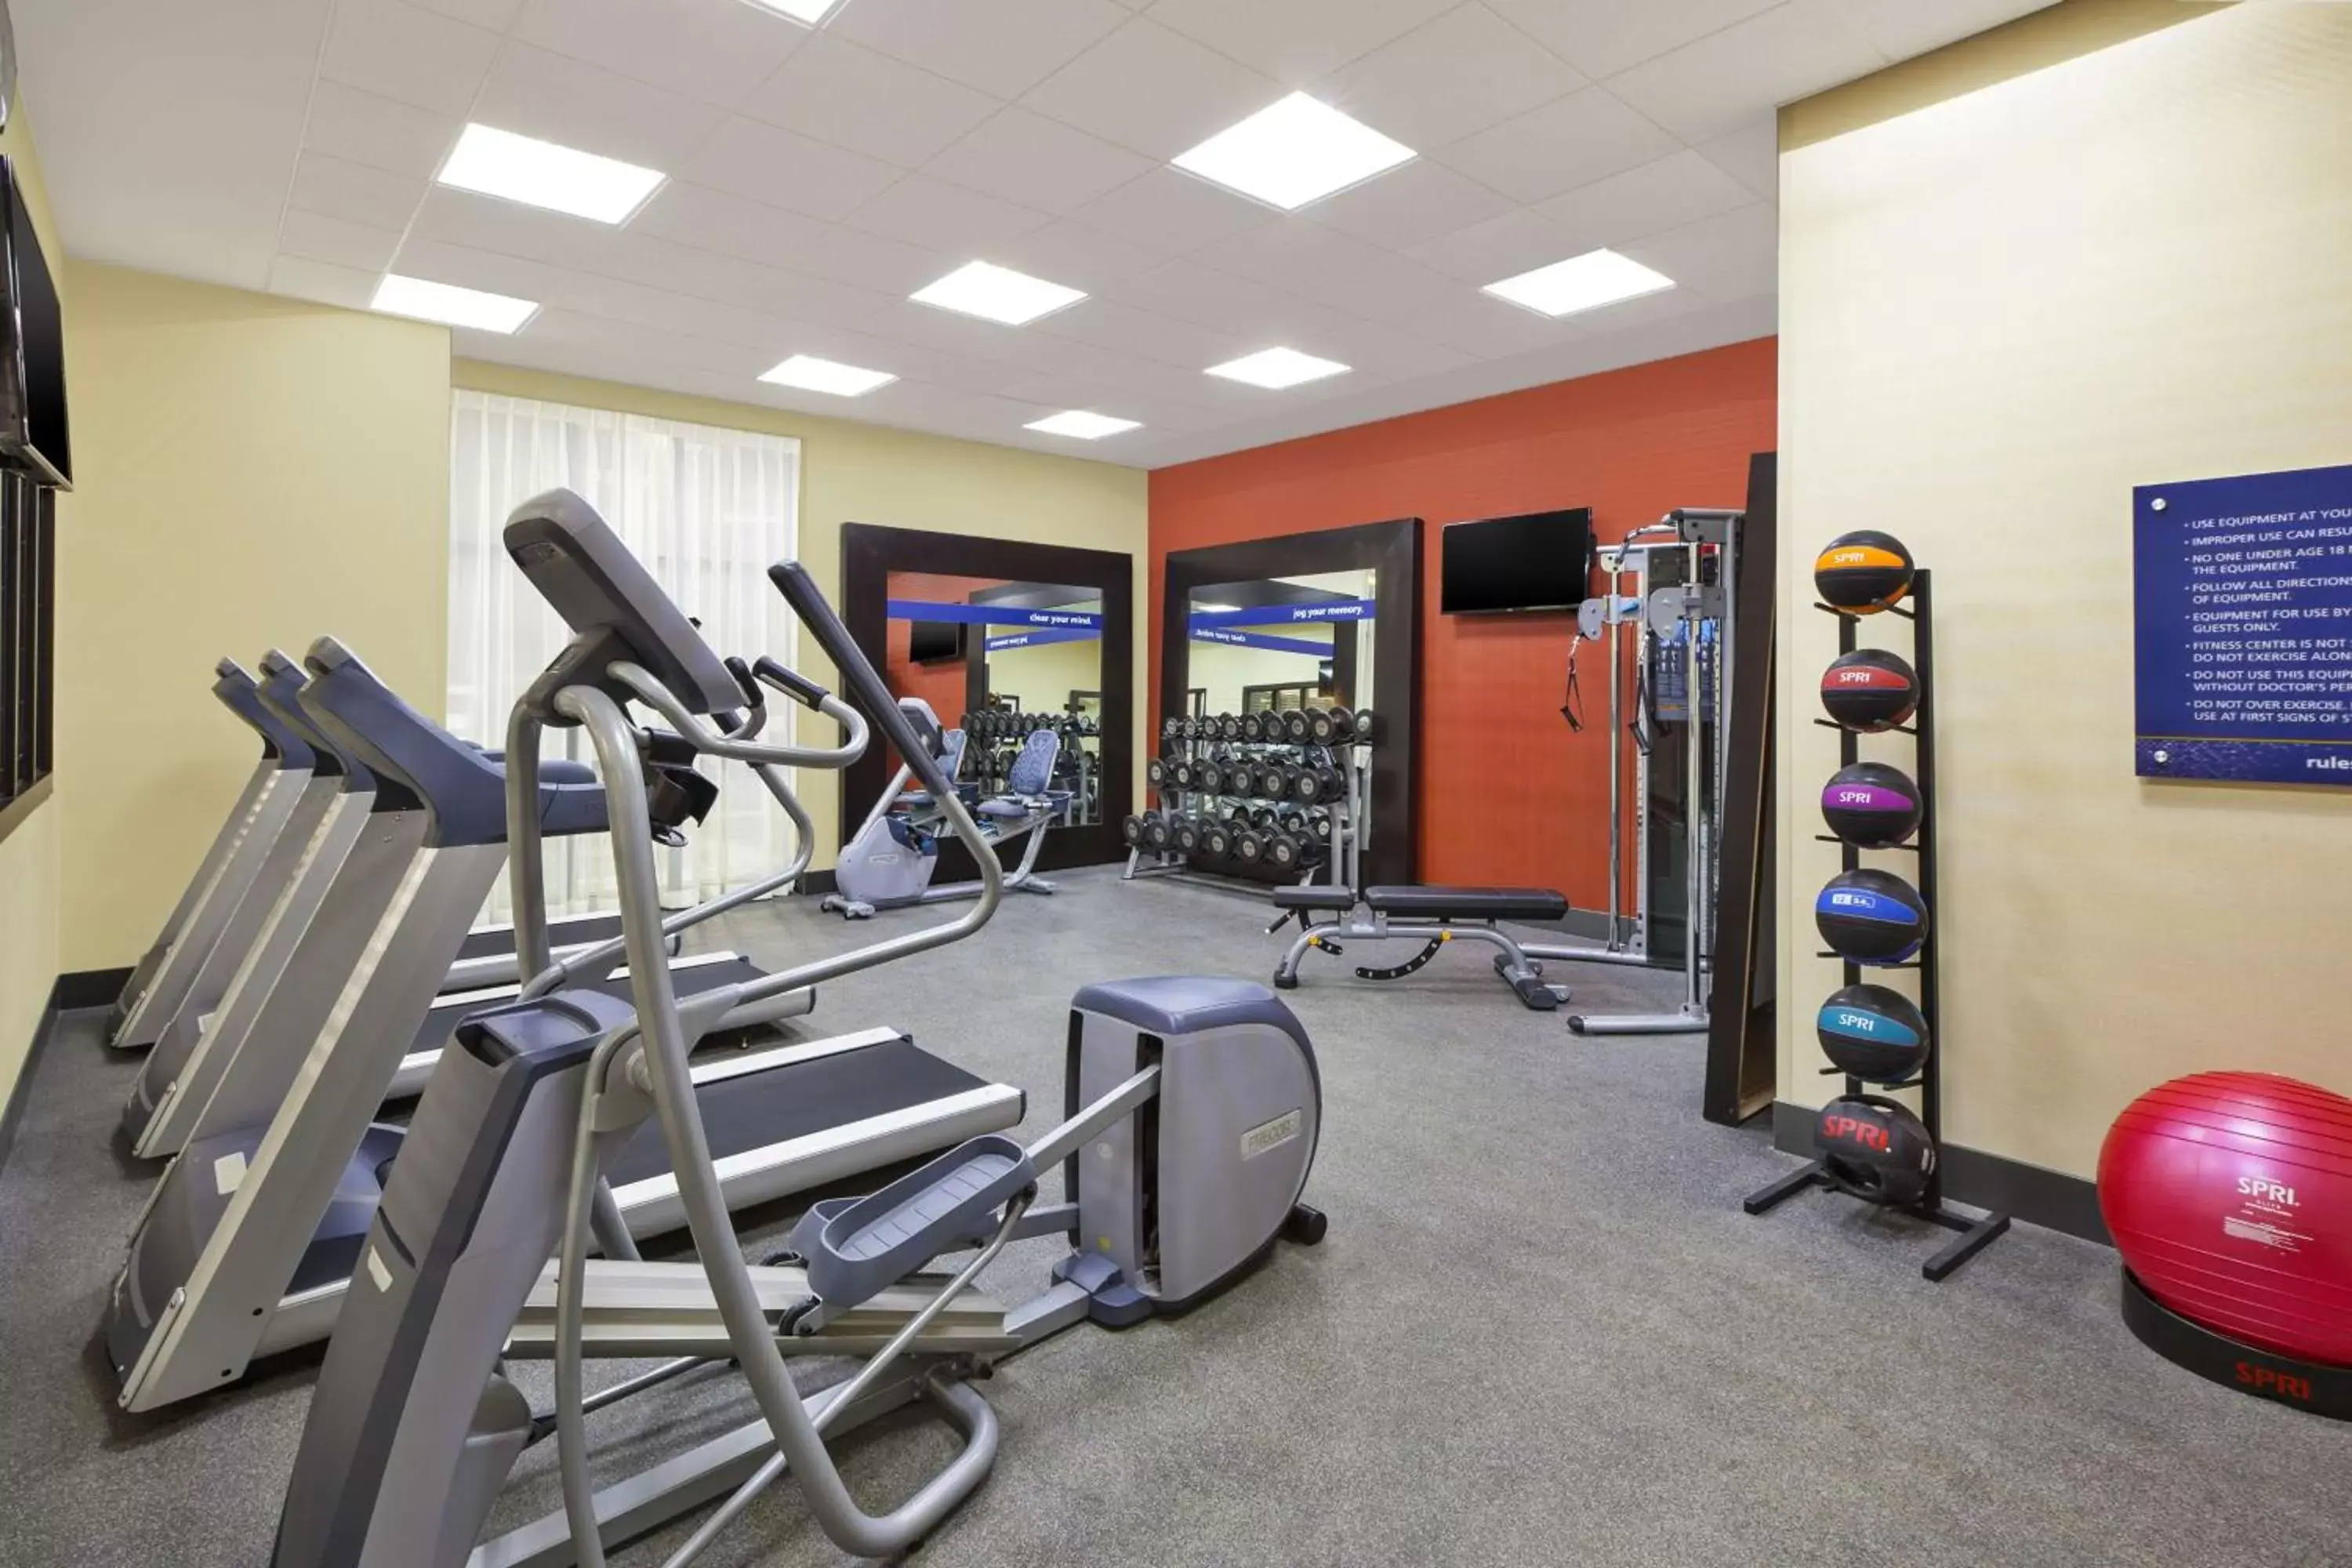 Fitness centre/facilities, Fitness Center/Facilities in Hampton Inn by Hilton Detroit Dearborn, MI